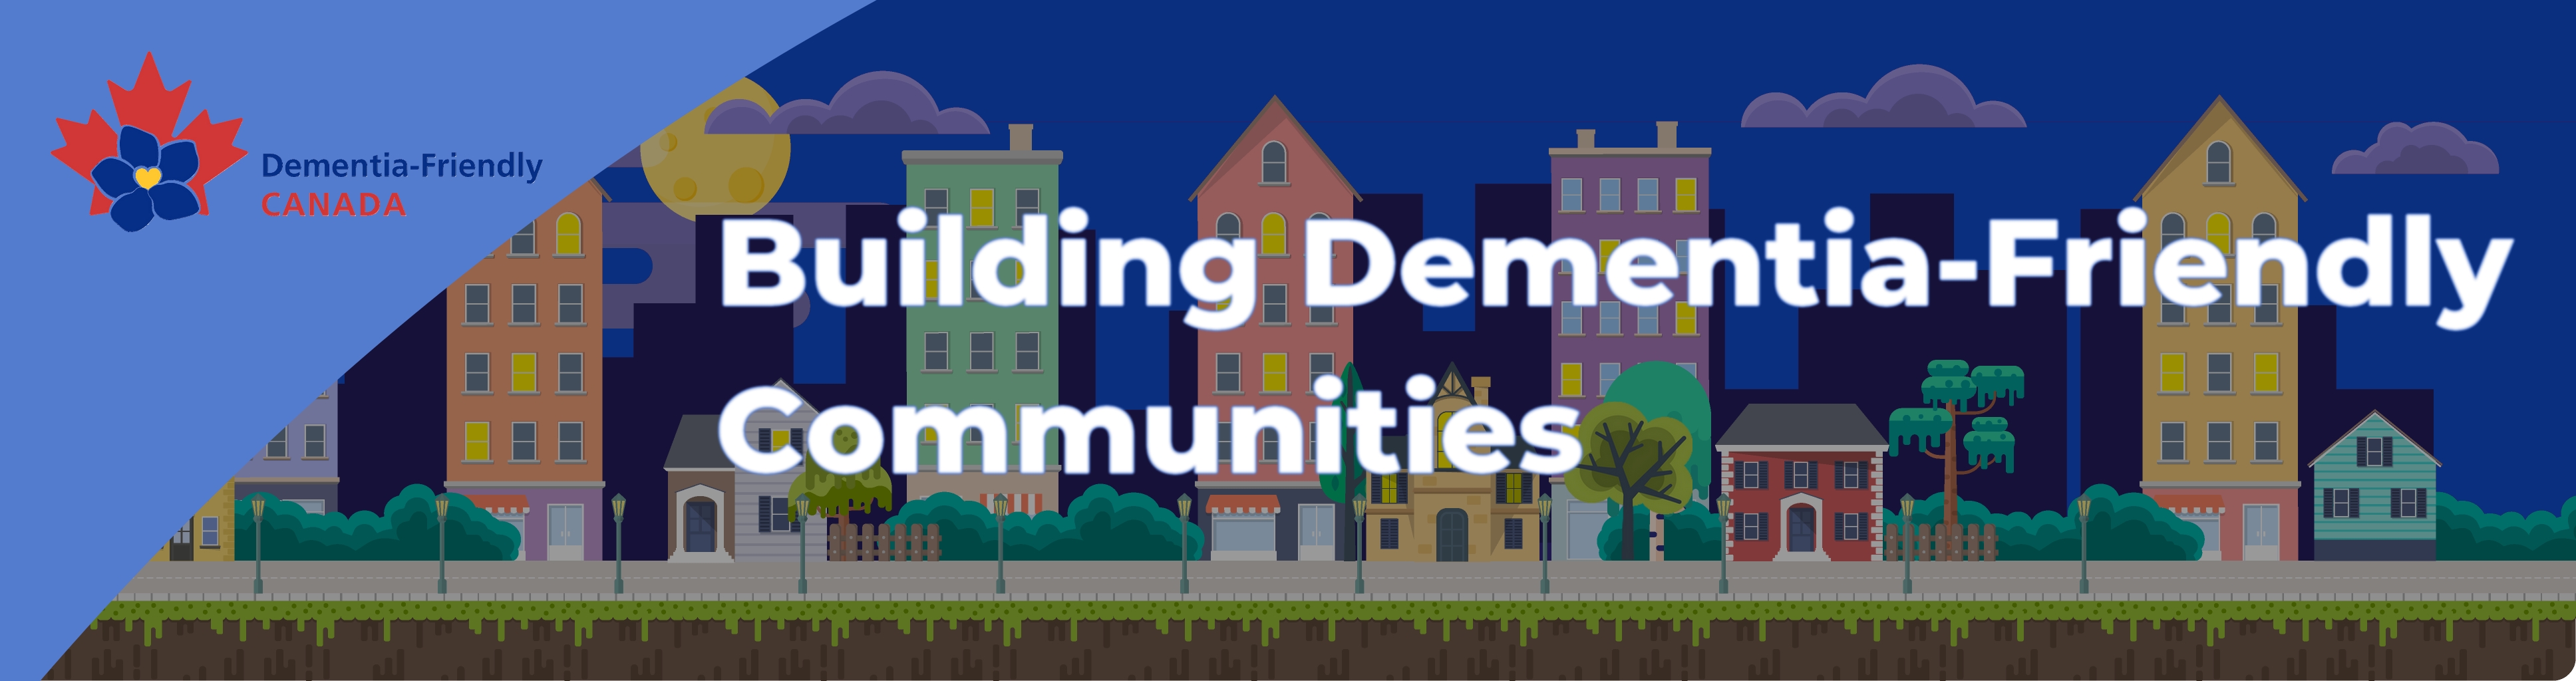 Banner for Dementia-Friendly Canada -- Building Dementia-Friendly Communities